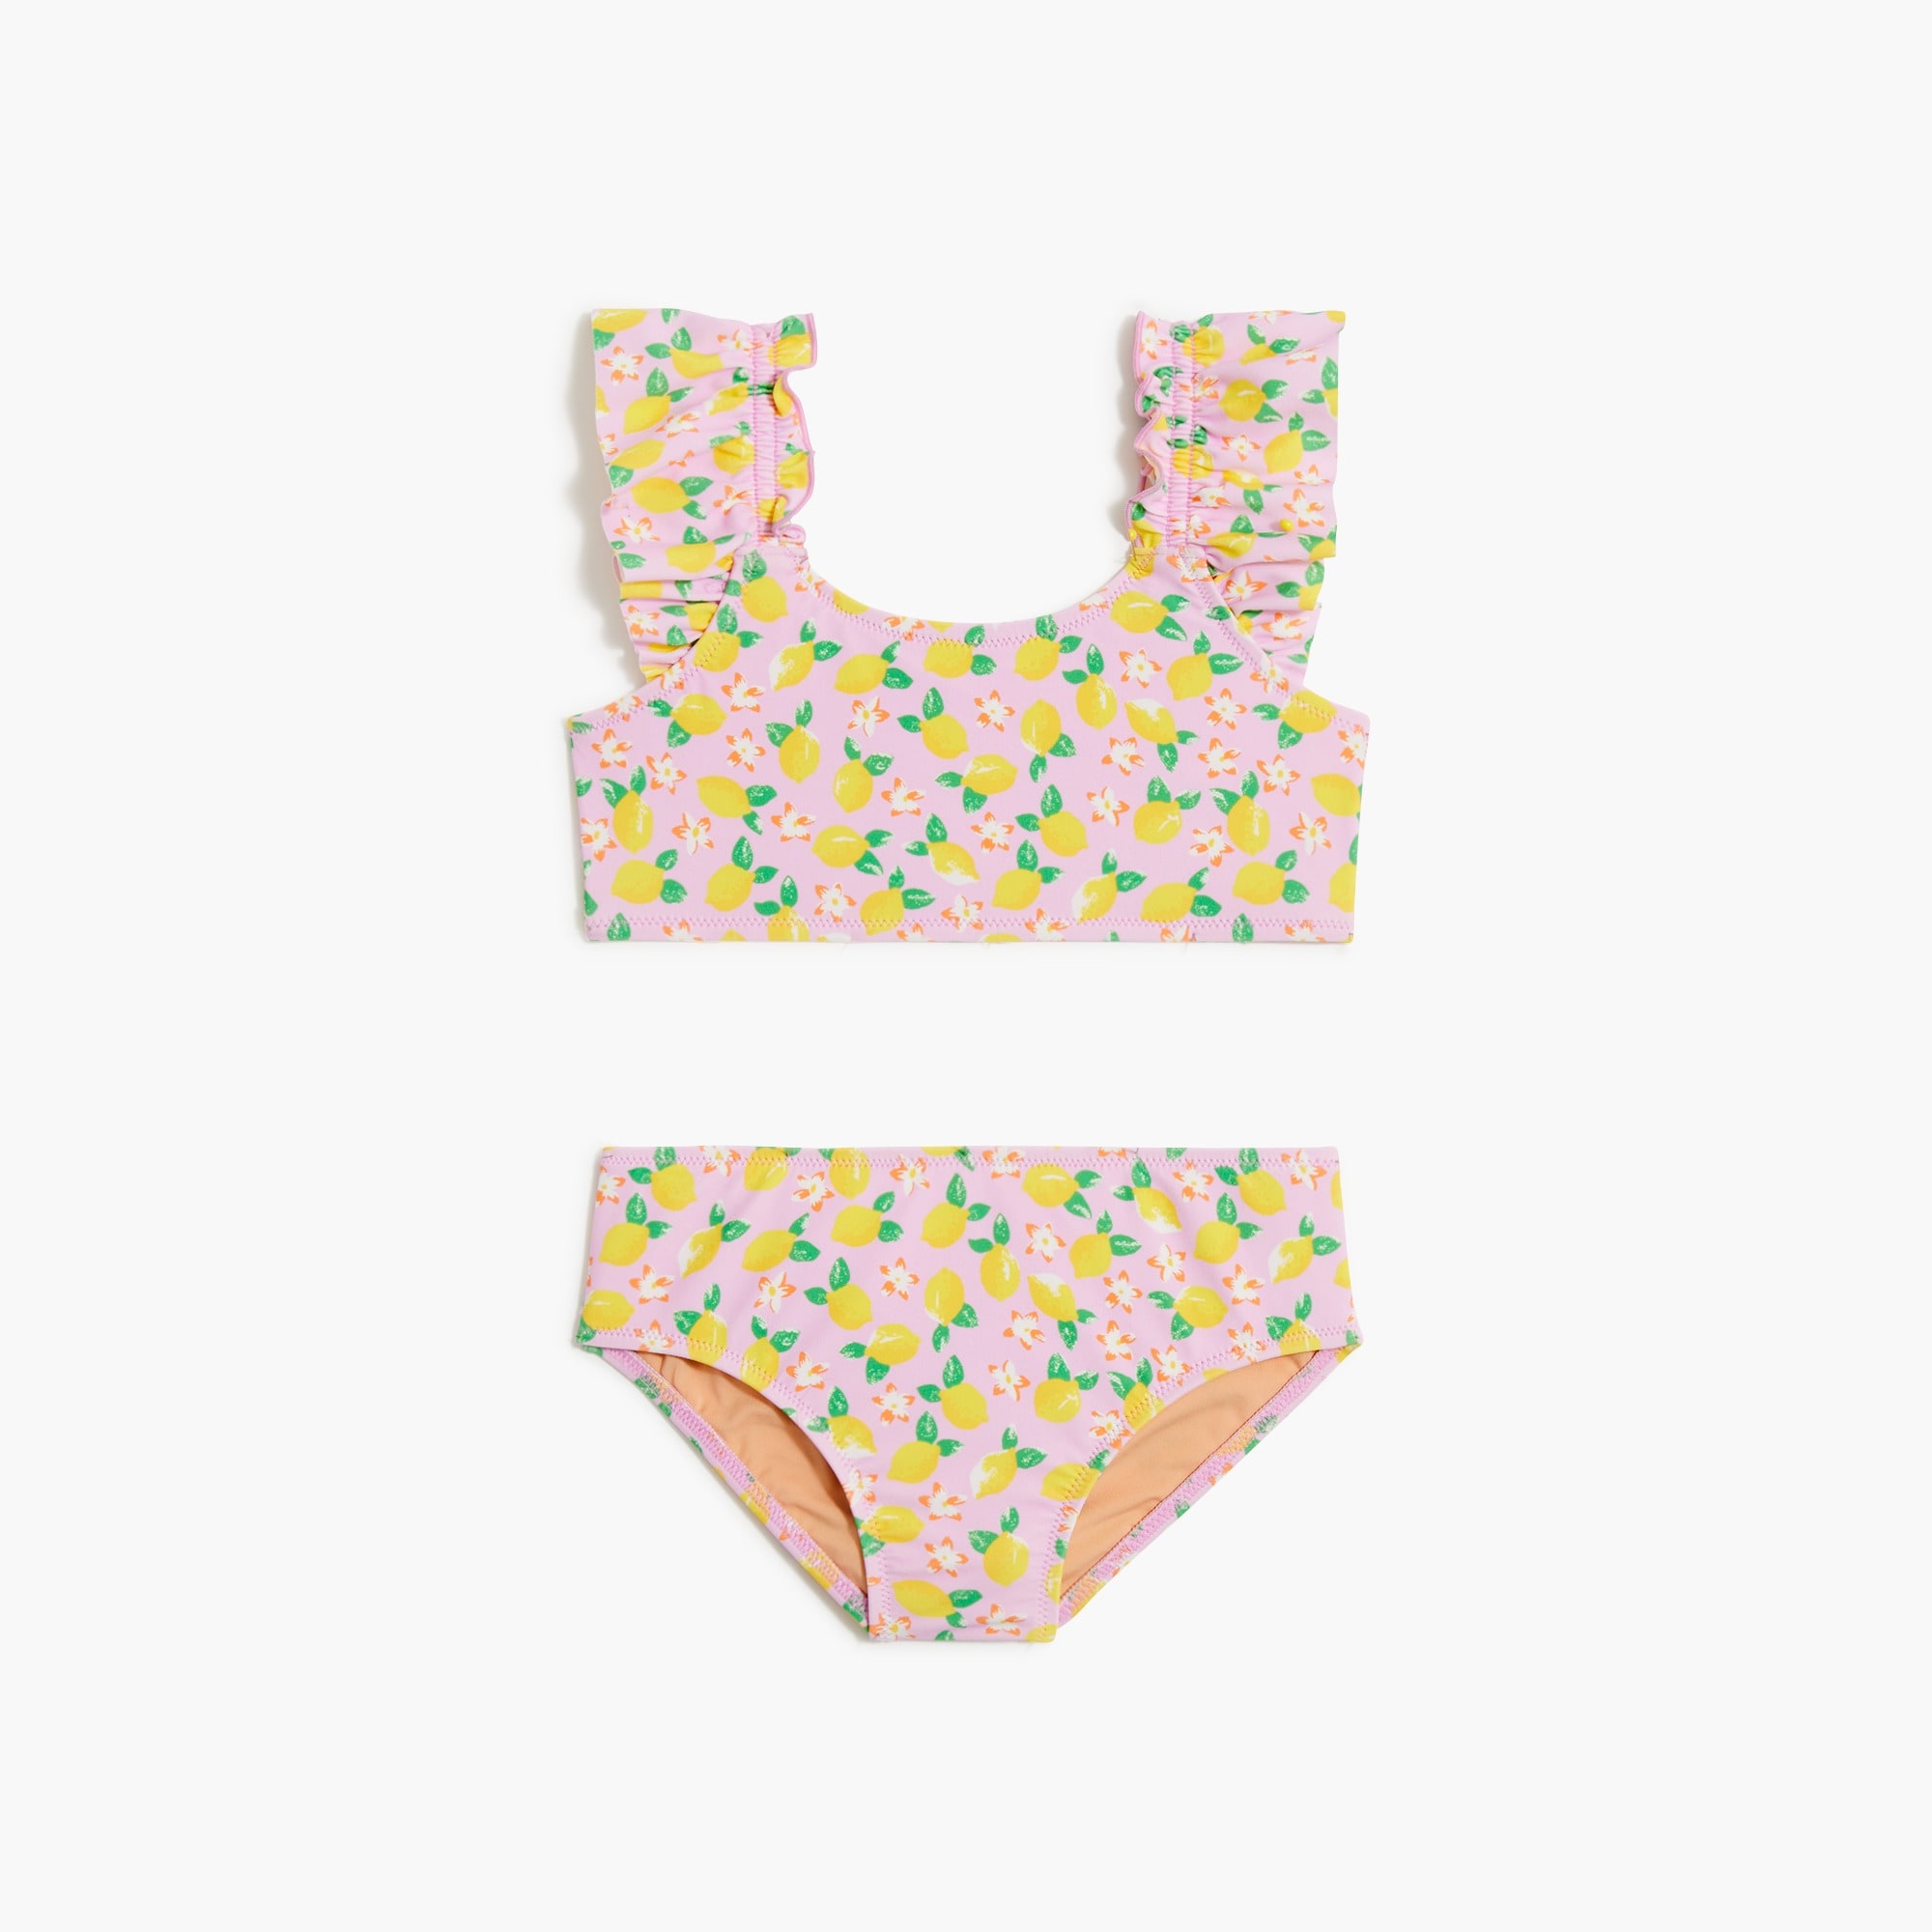  Girls' lemon ruffle-strap bikini set